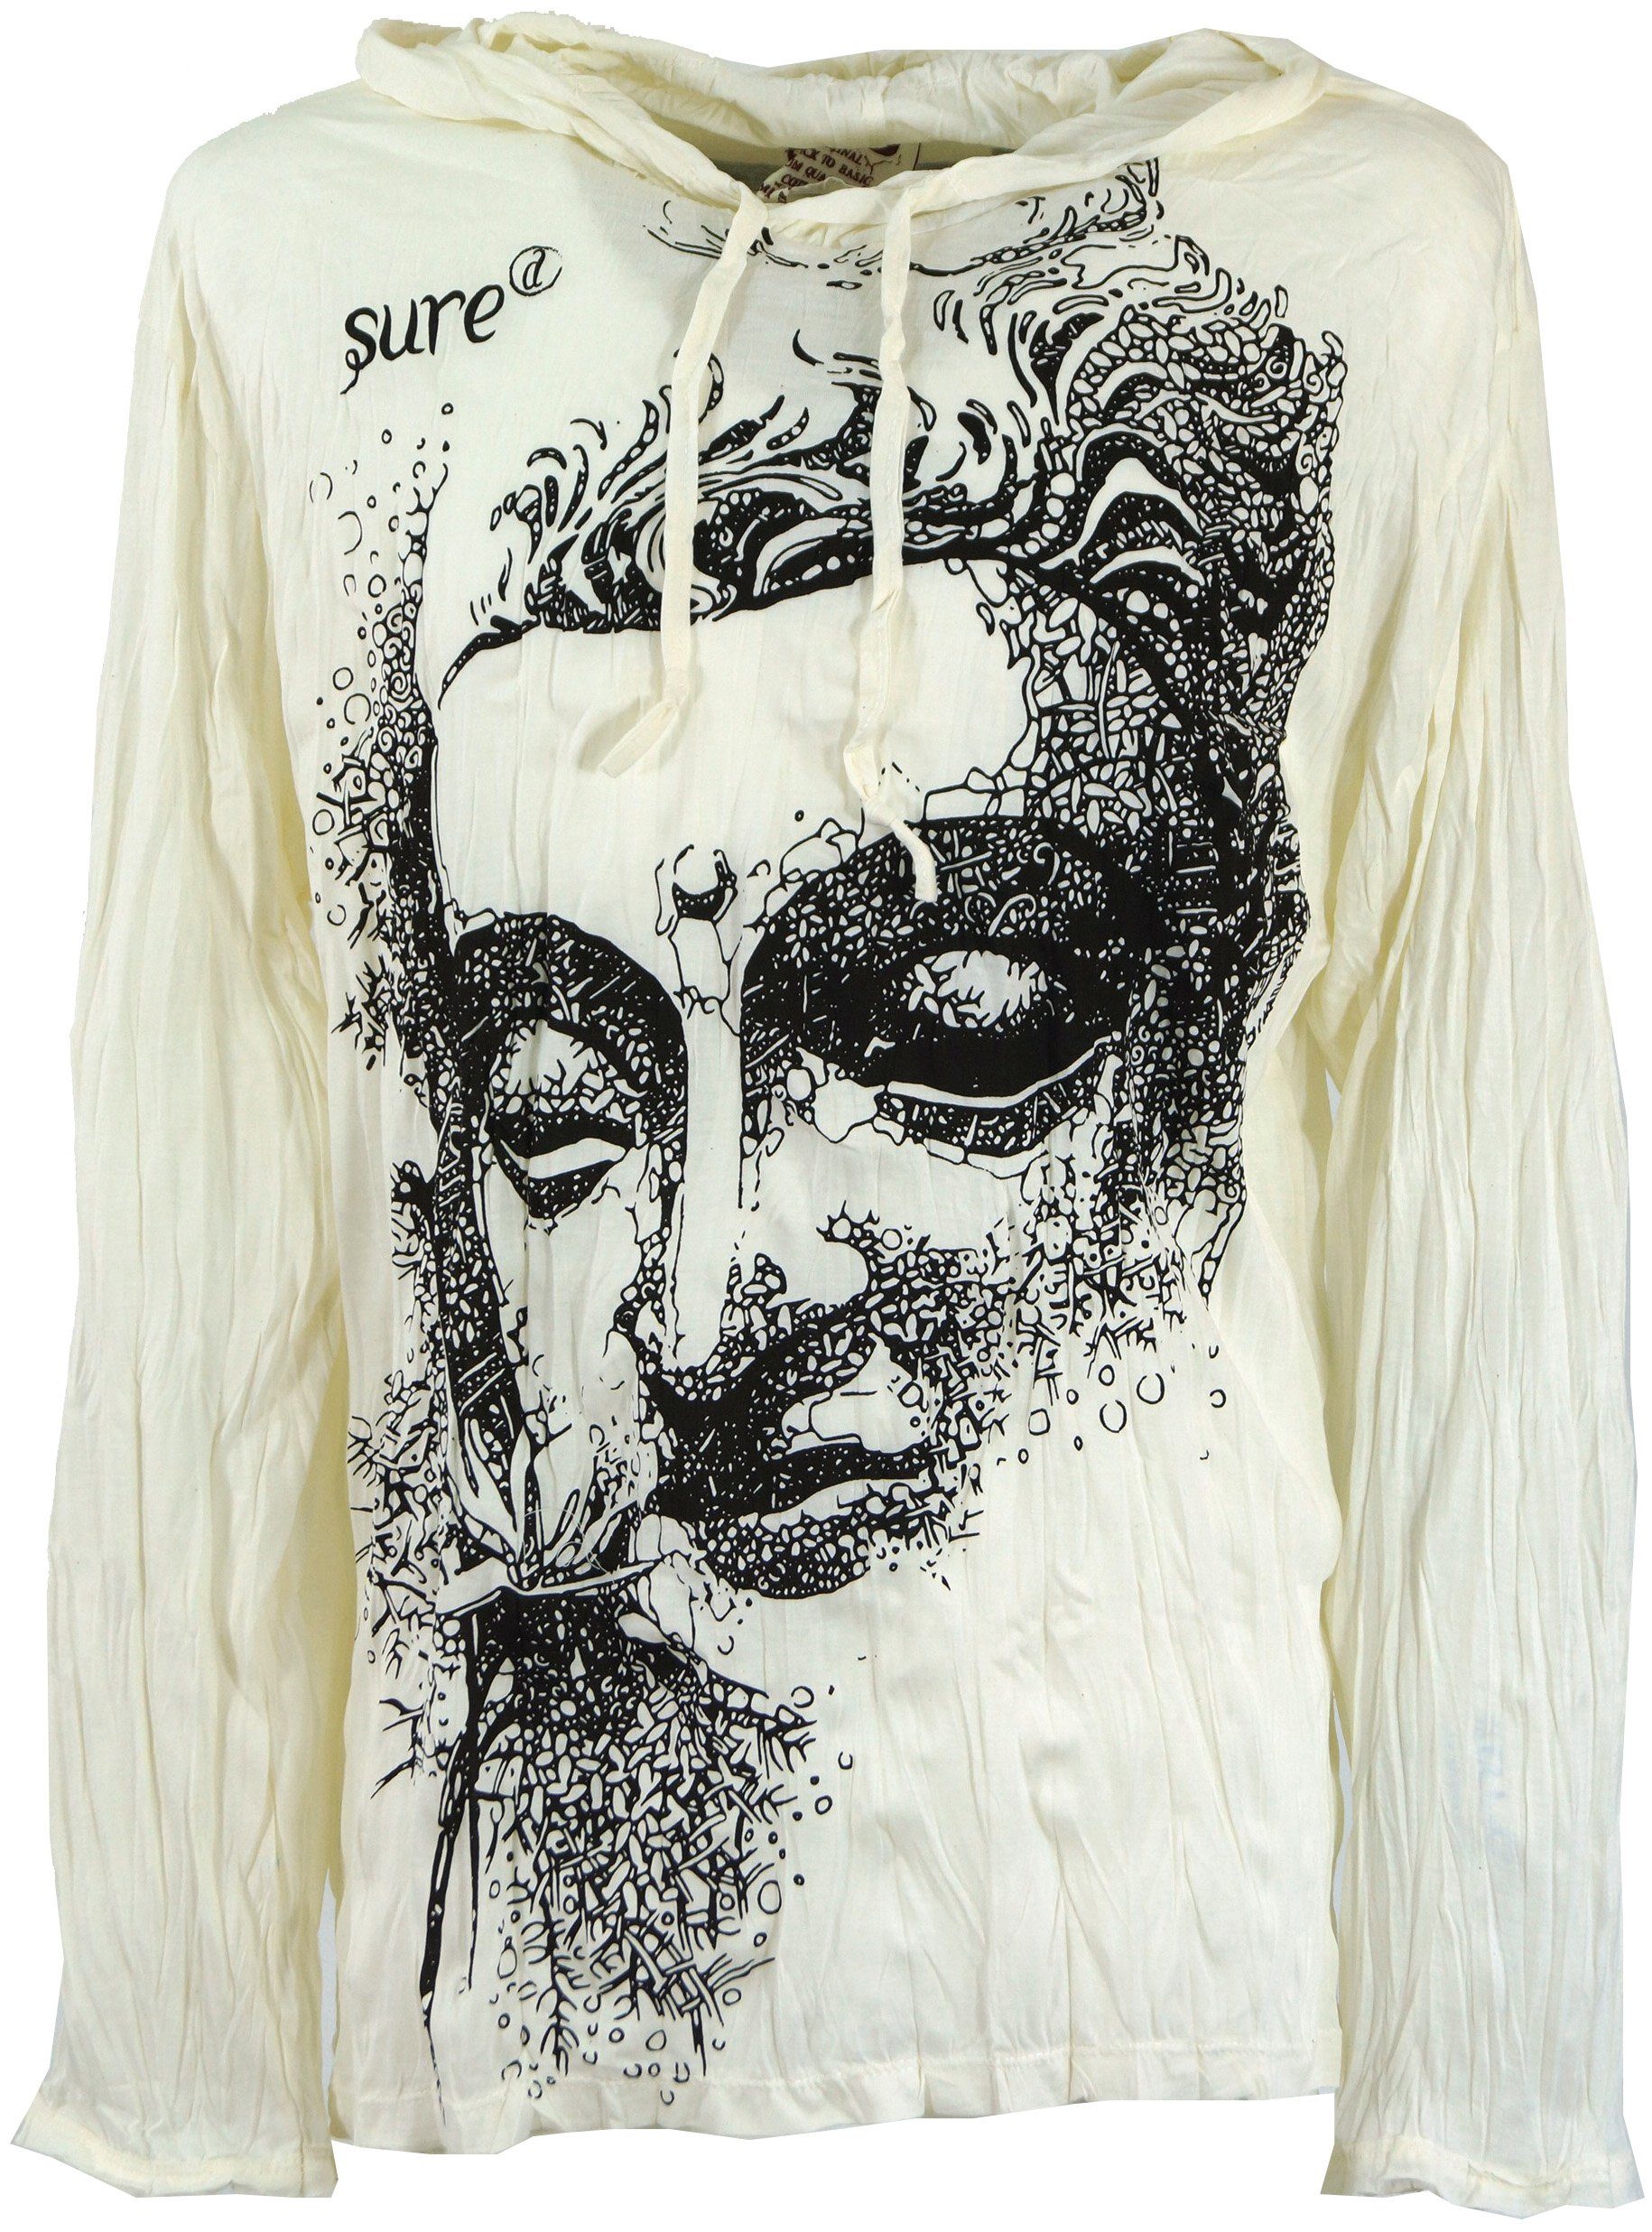 Guru-Shop T-Shirt Sure Langarmshirt, Kapuzenshirt Dreaming Buddha.. Goa Style, Festival, alternative Bekleidung weiß